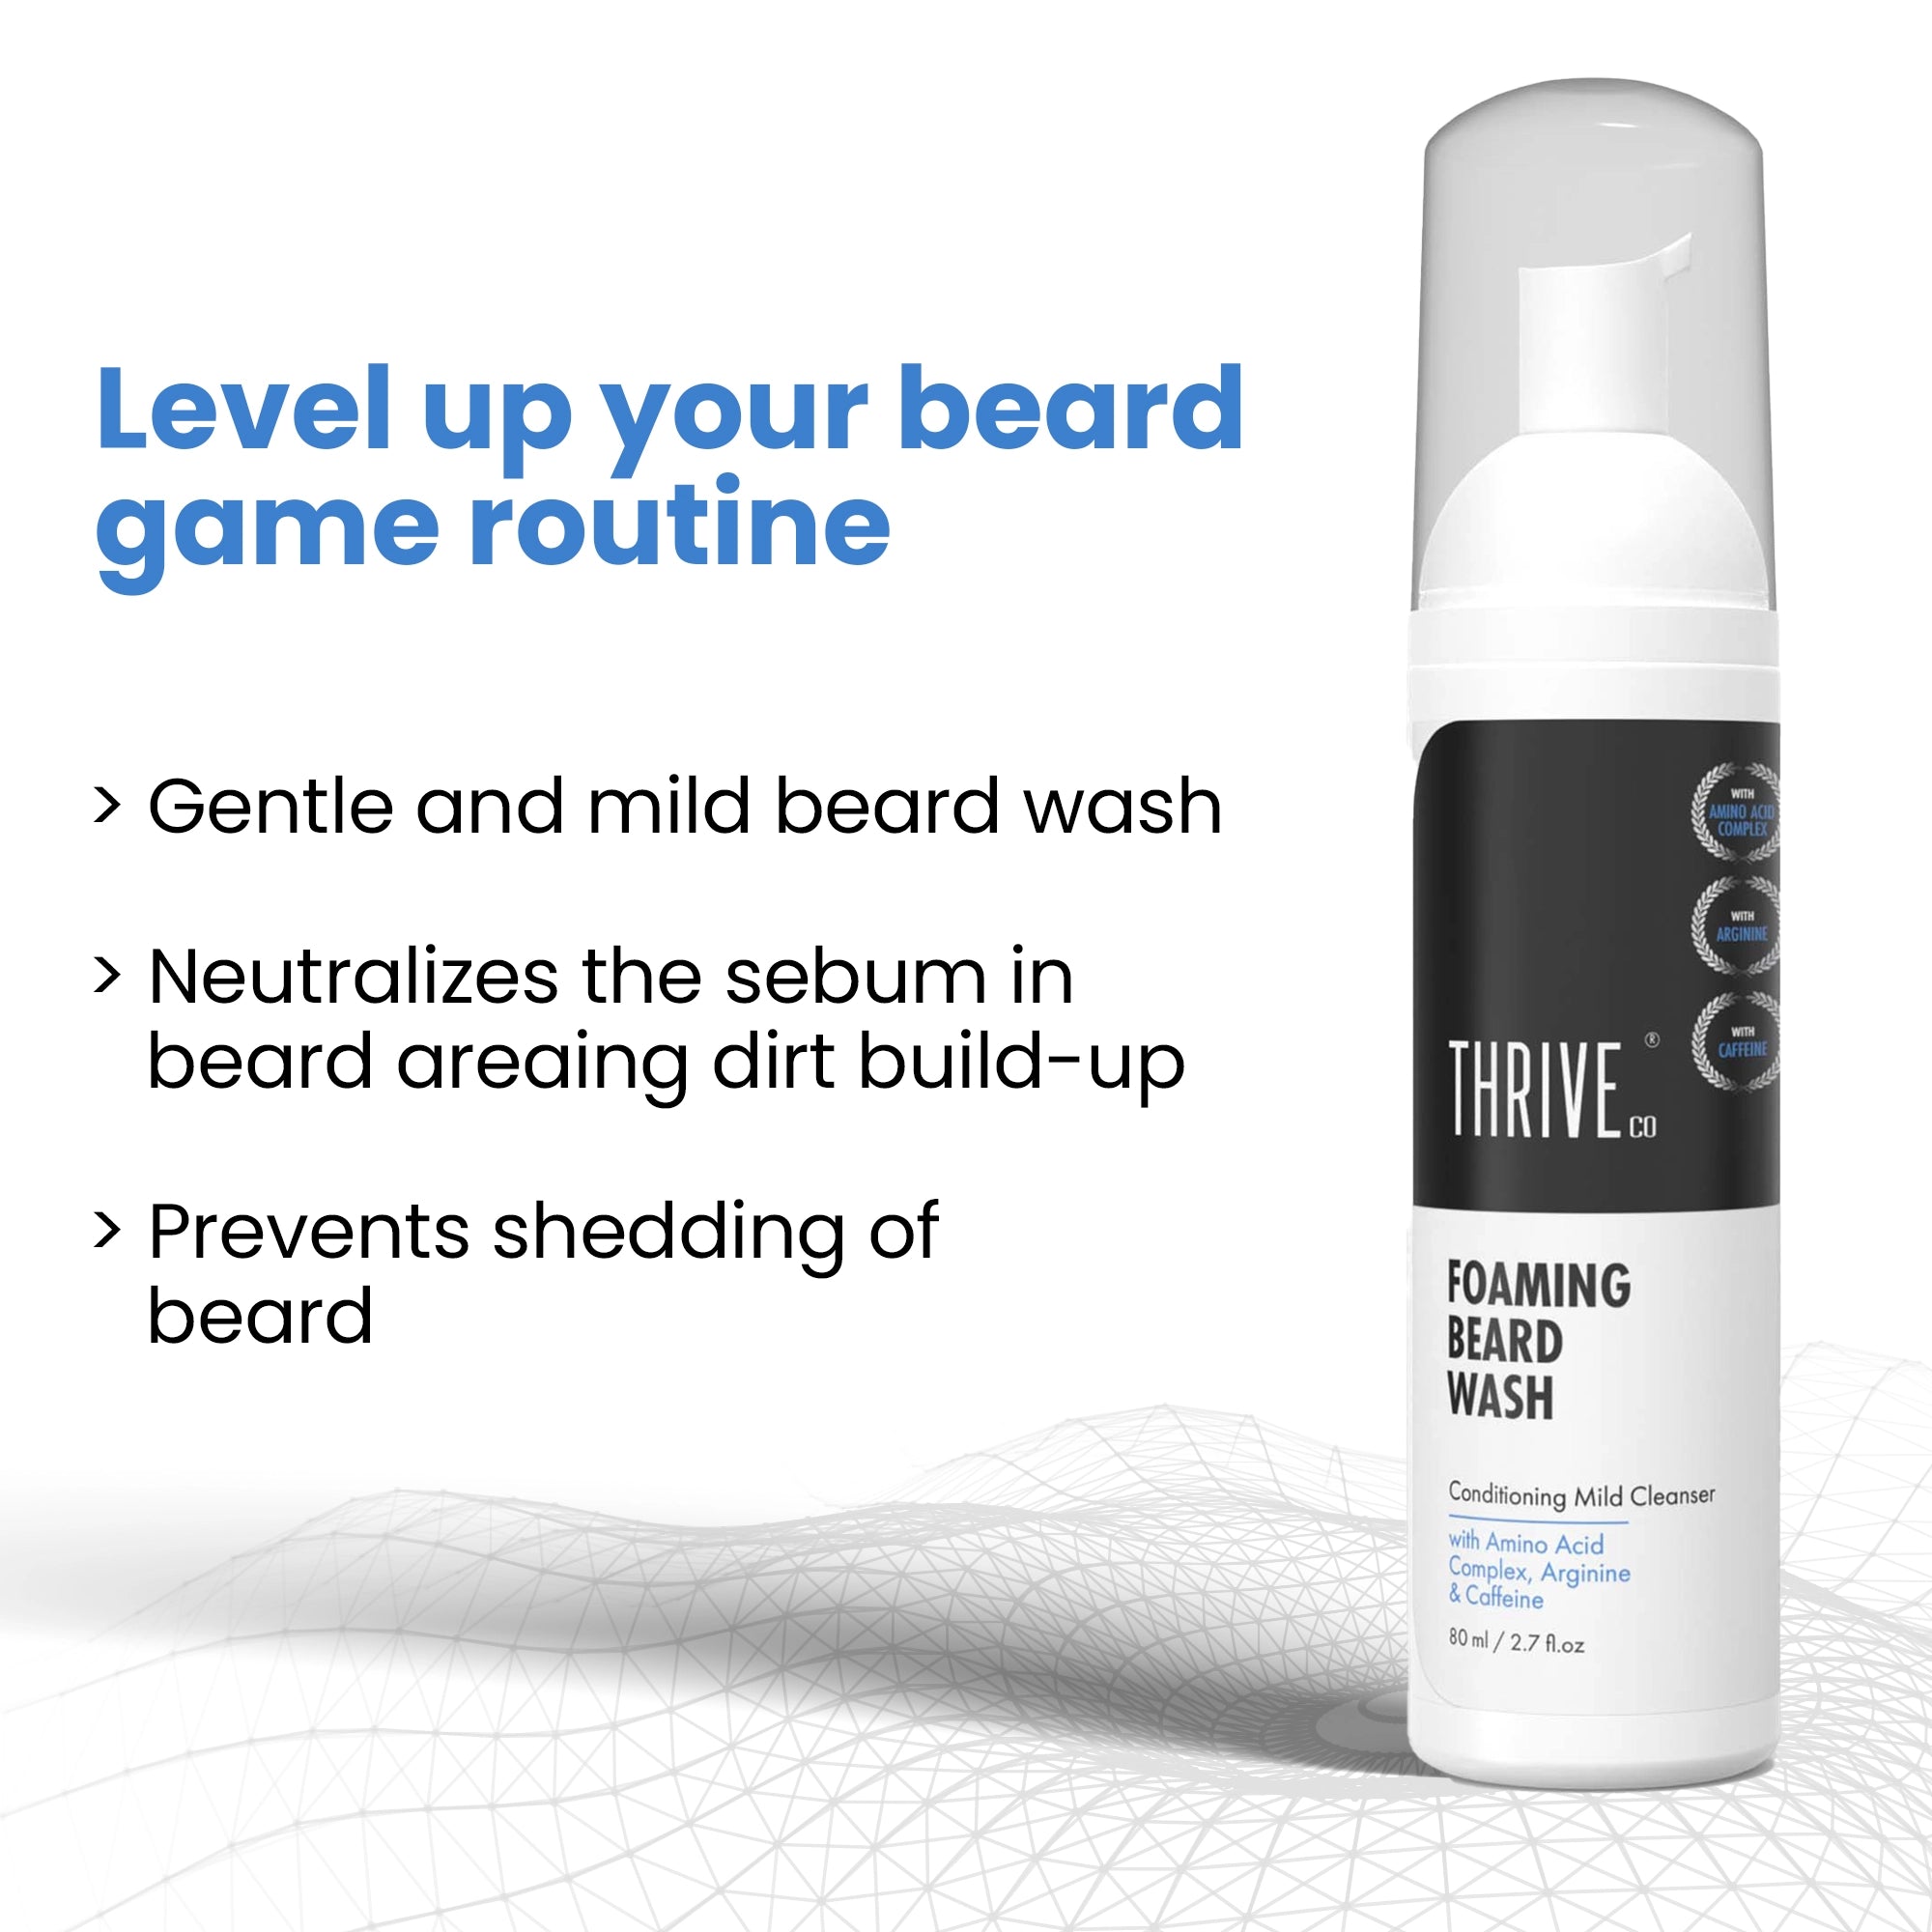 ThriveCo Foaming Beard Wash, 80ml